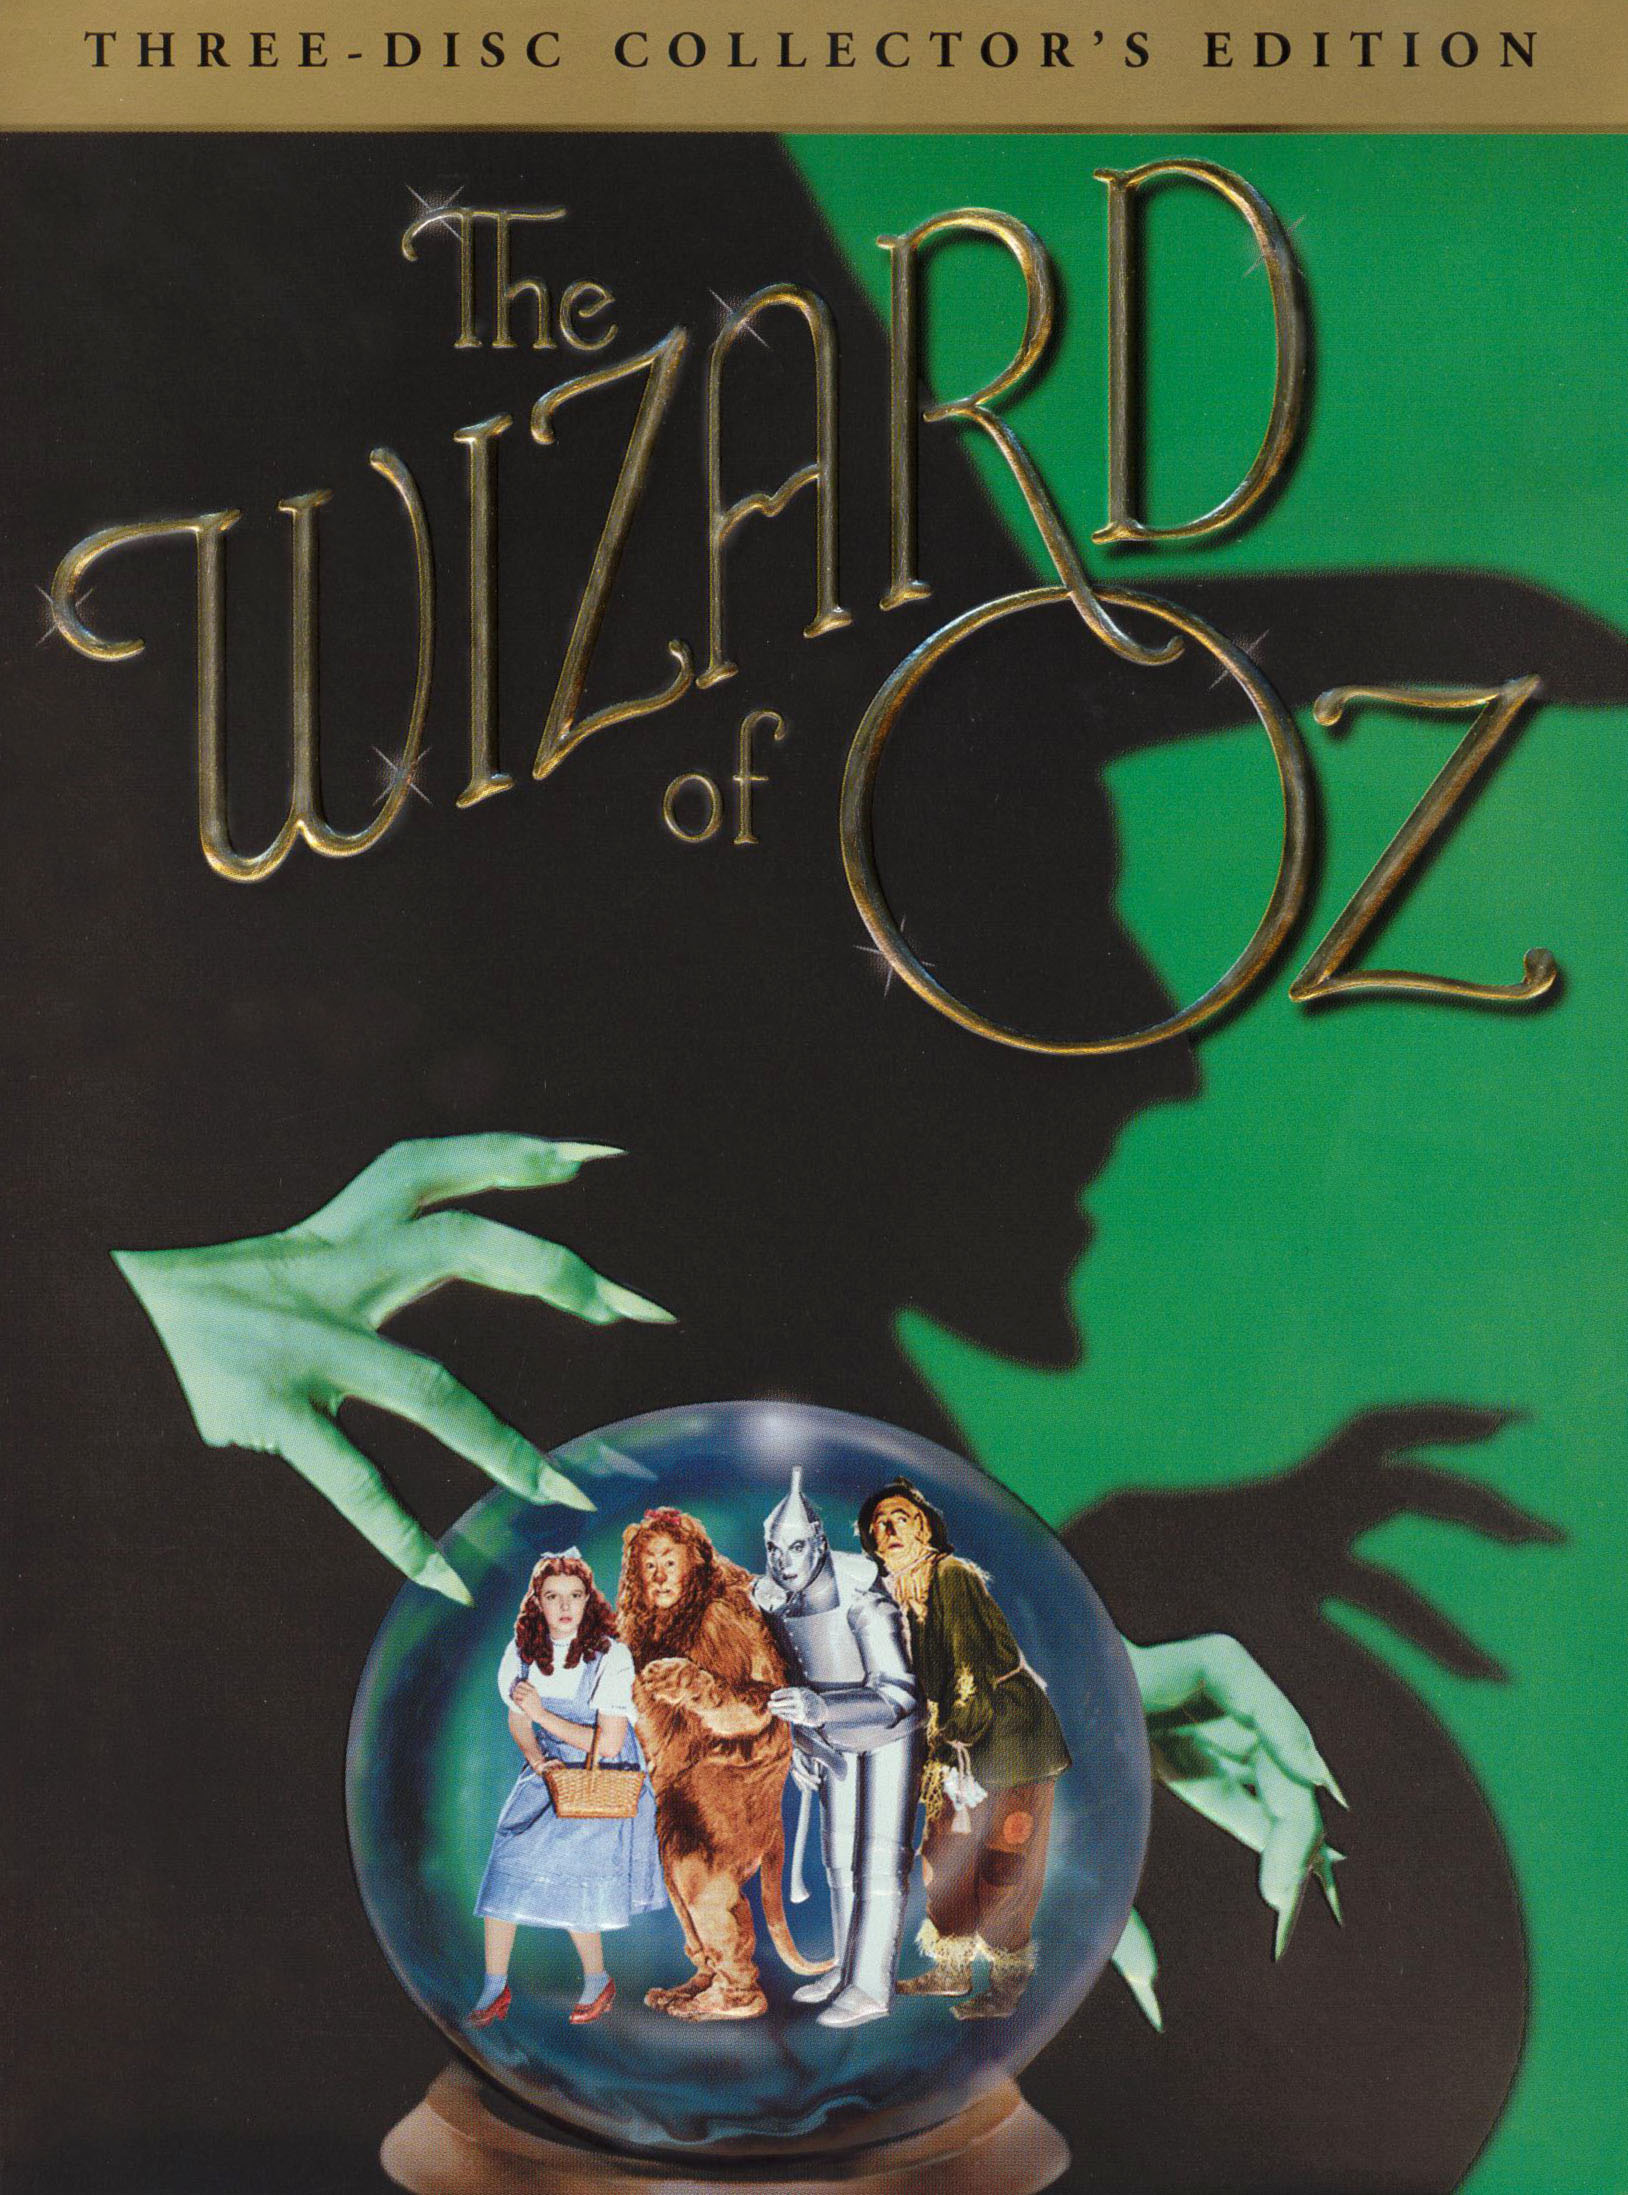 The Wizard of Oz [4K Ultra HD Blu-ray/Blu-ray] [1939] - Best Buy